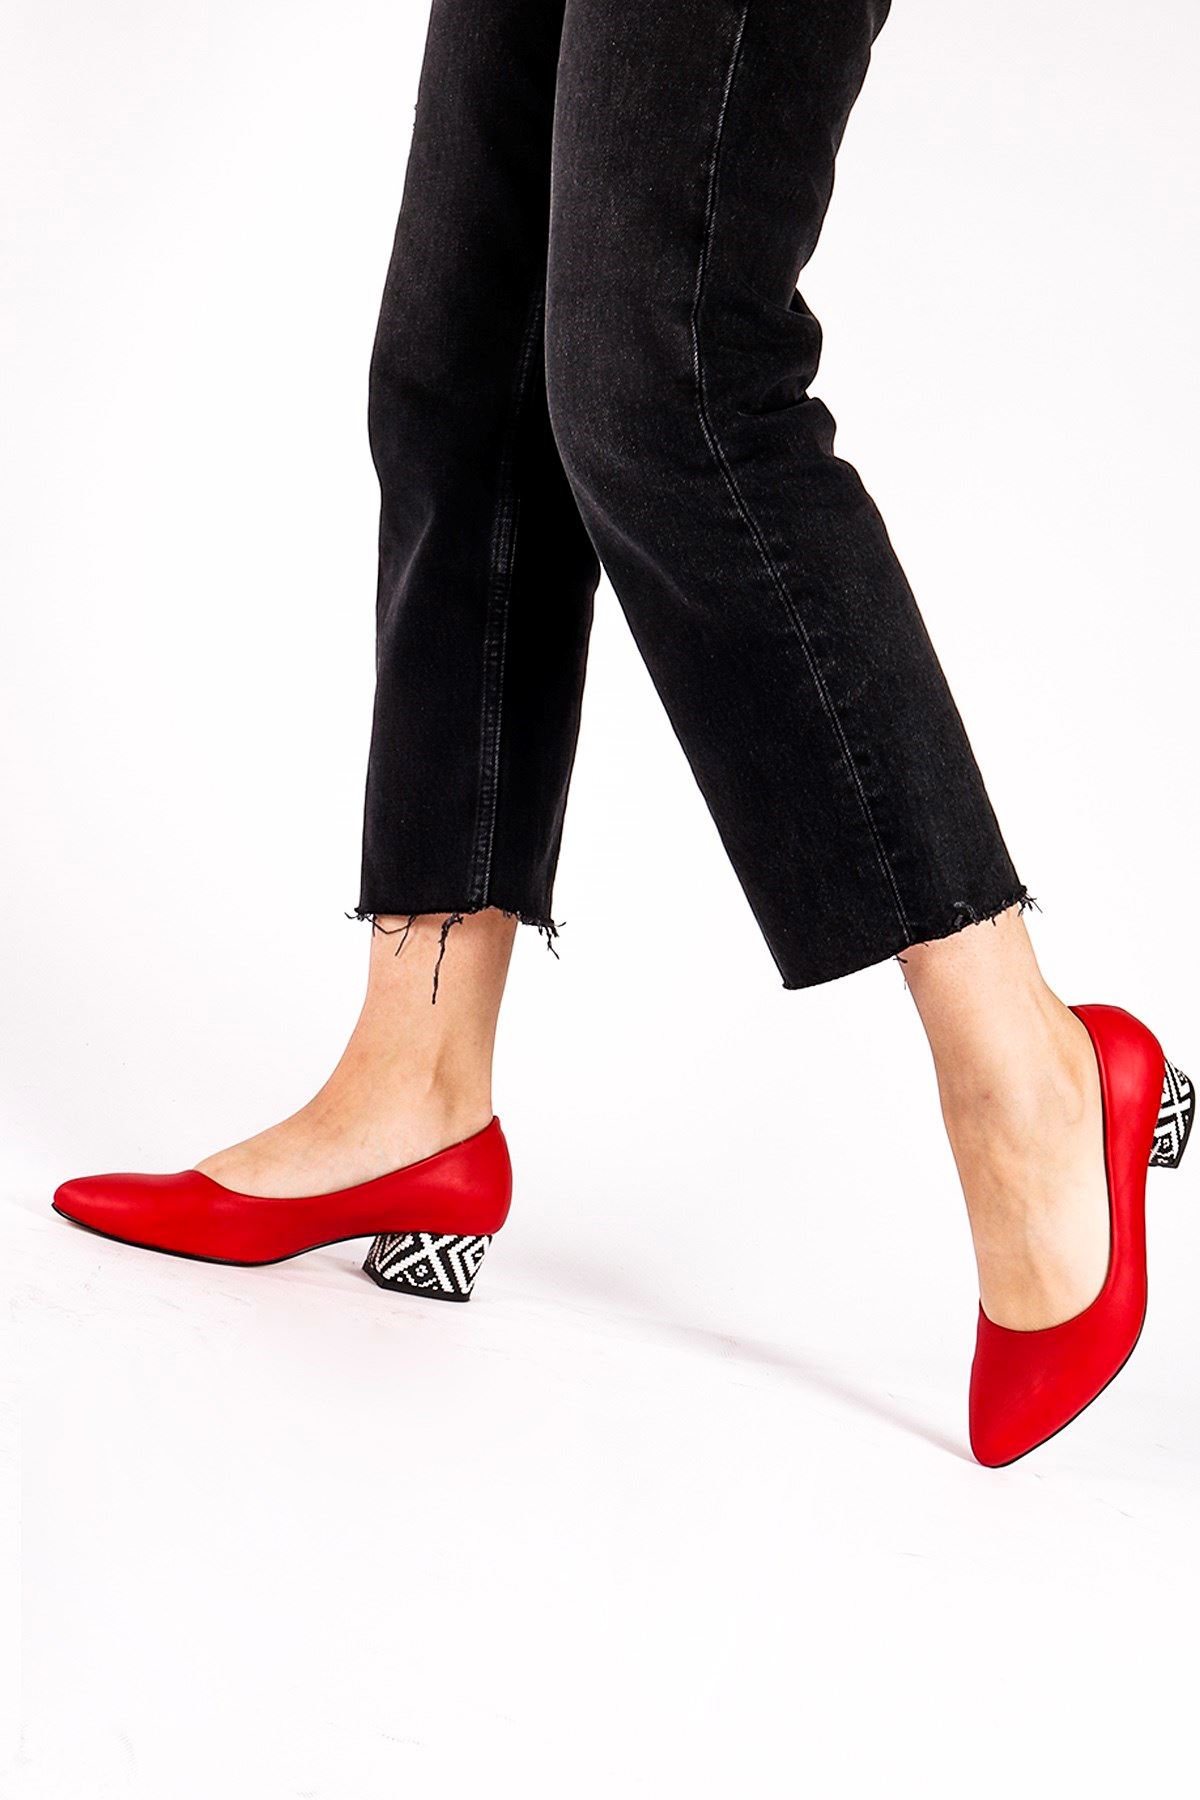 Fori Kırmızı Cilt Topuklu Ayakkabı